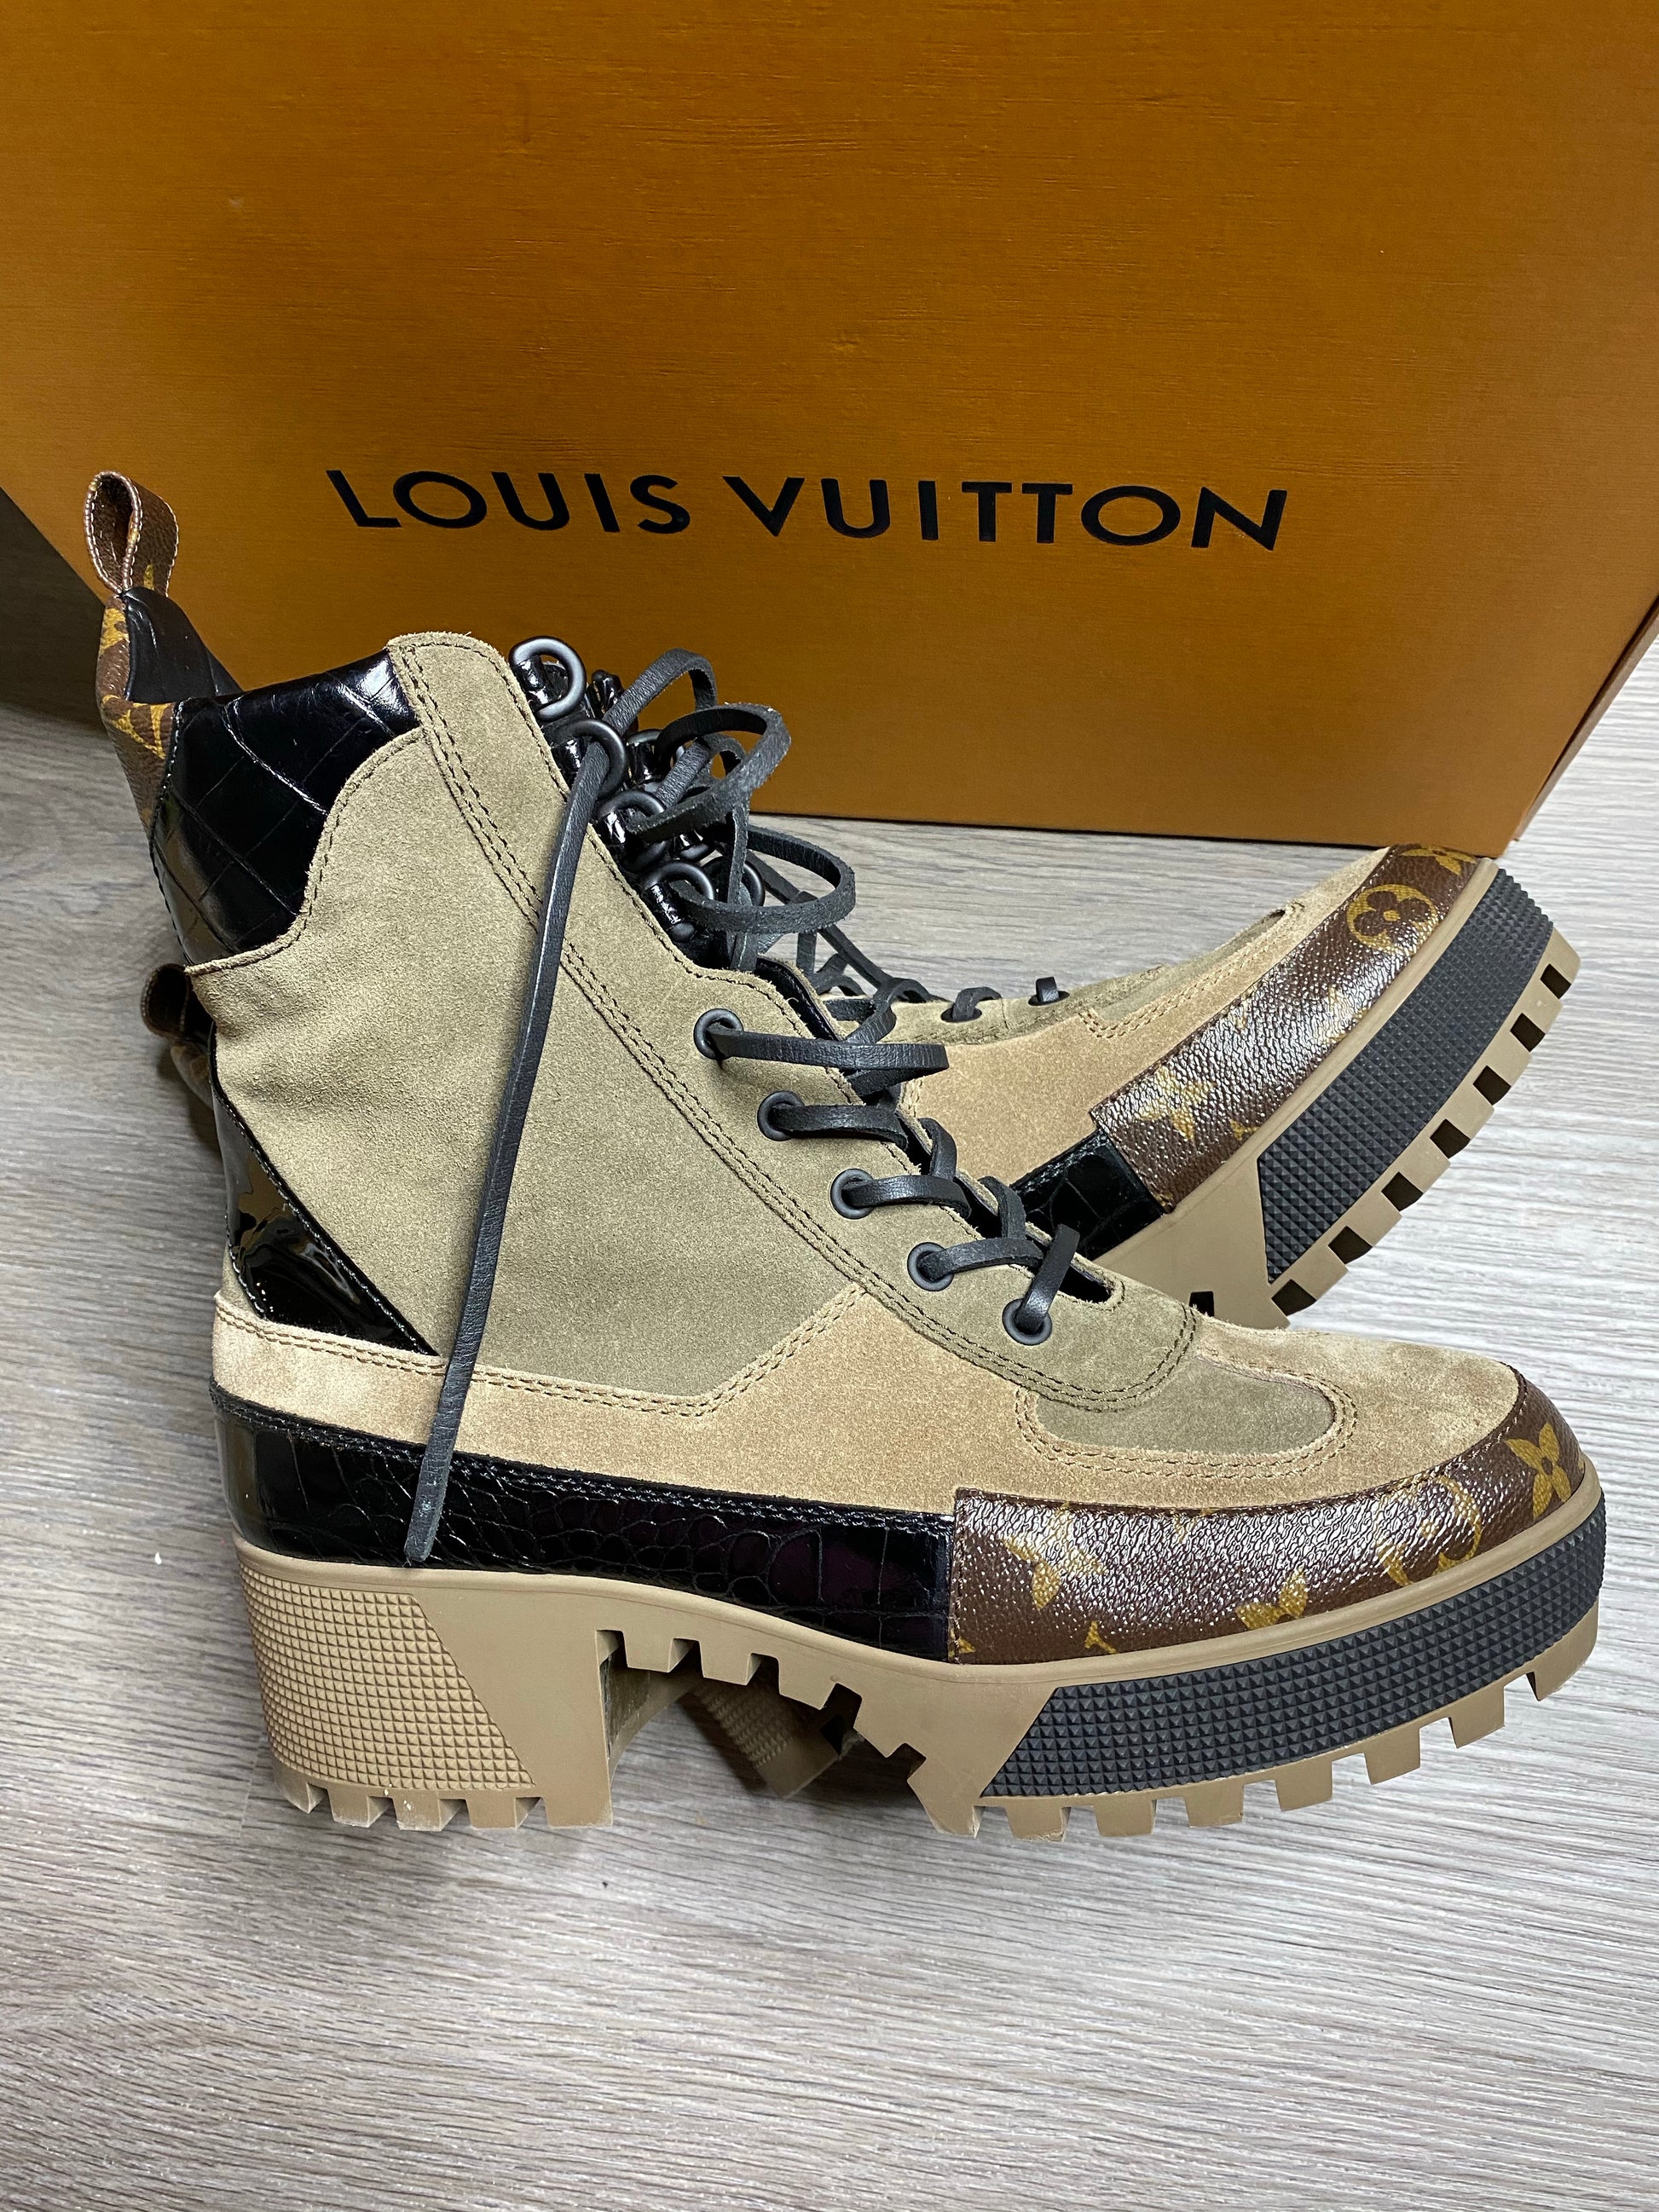 Louis Vuitton Laureate Platform Desert Boot BLACK. Size 38.0